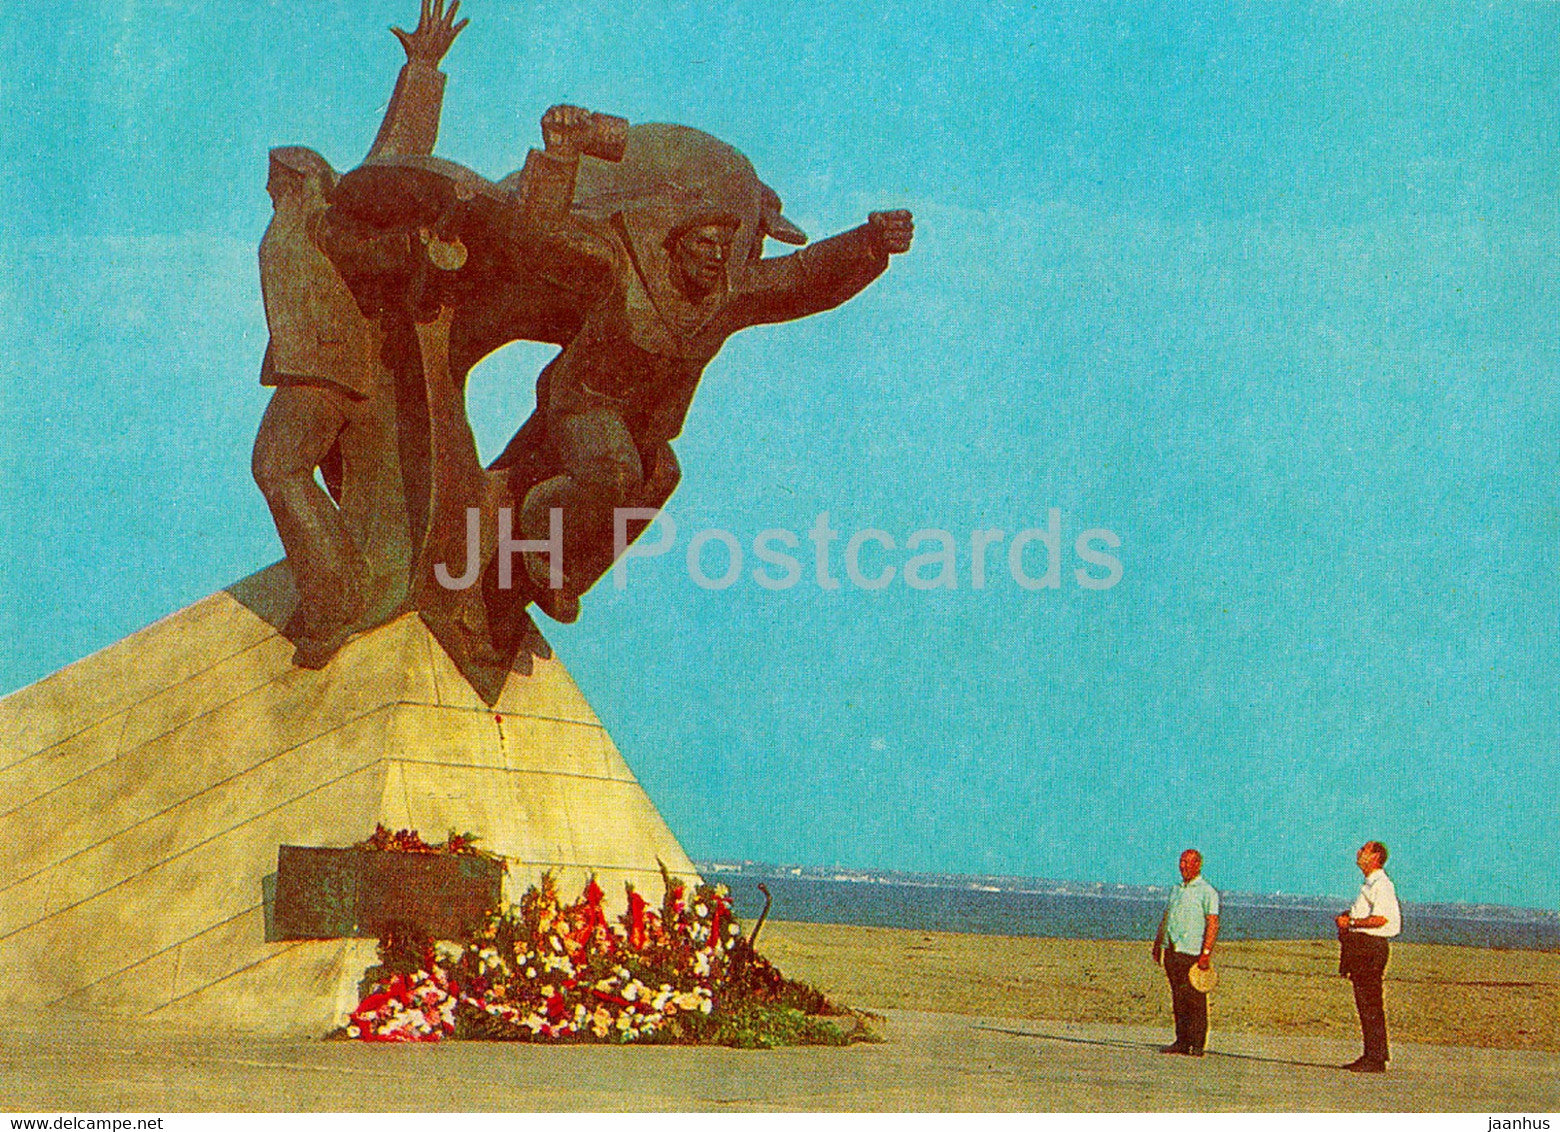 Yevpatoriya - monument to the sailors of the heroes of the Evpatoria landing - Crimea - 1971 - Ukraine USSR - unused - JH Postcards